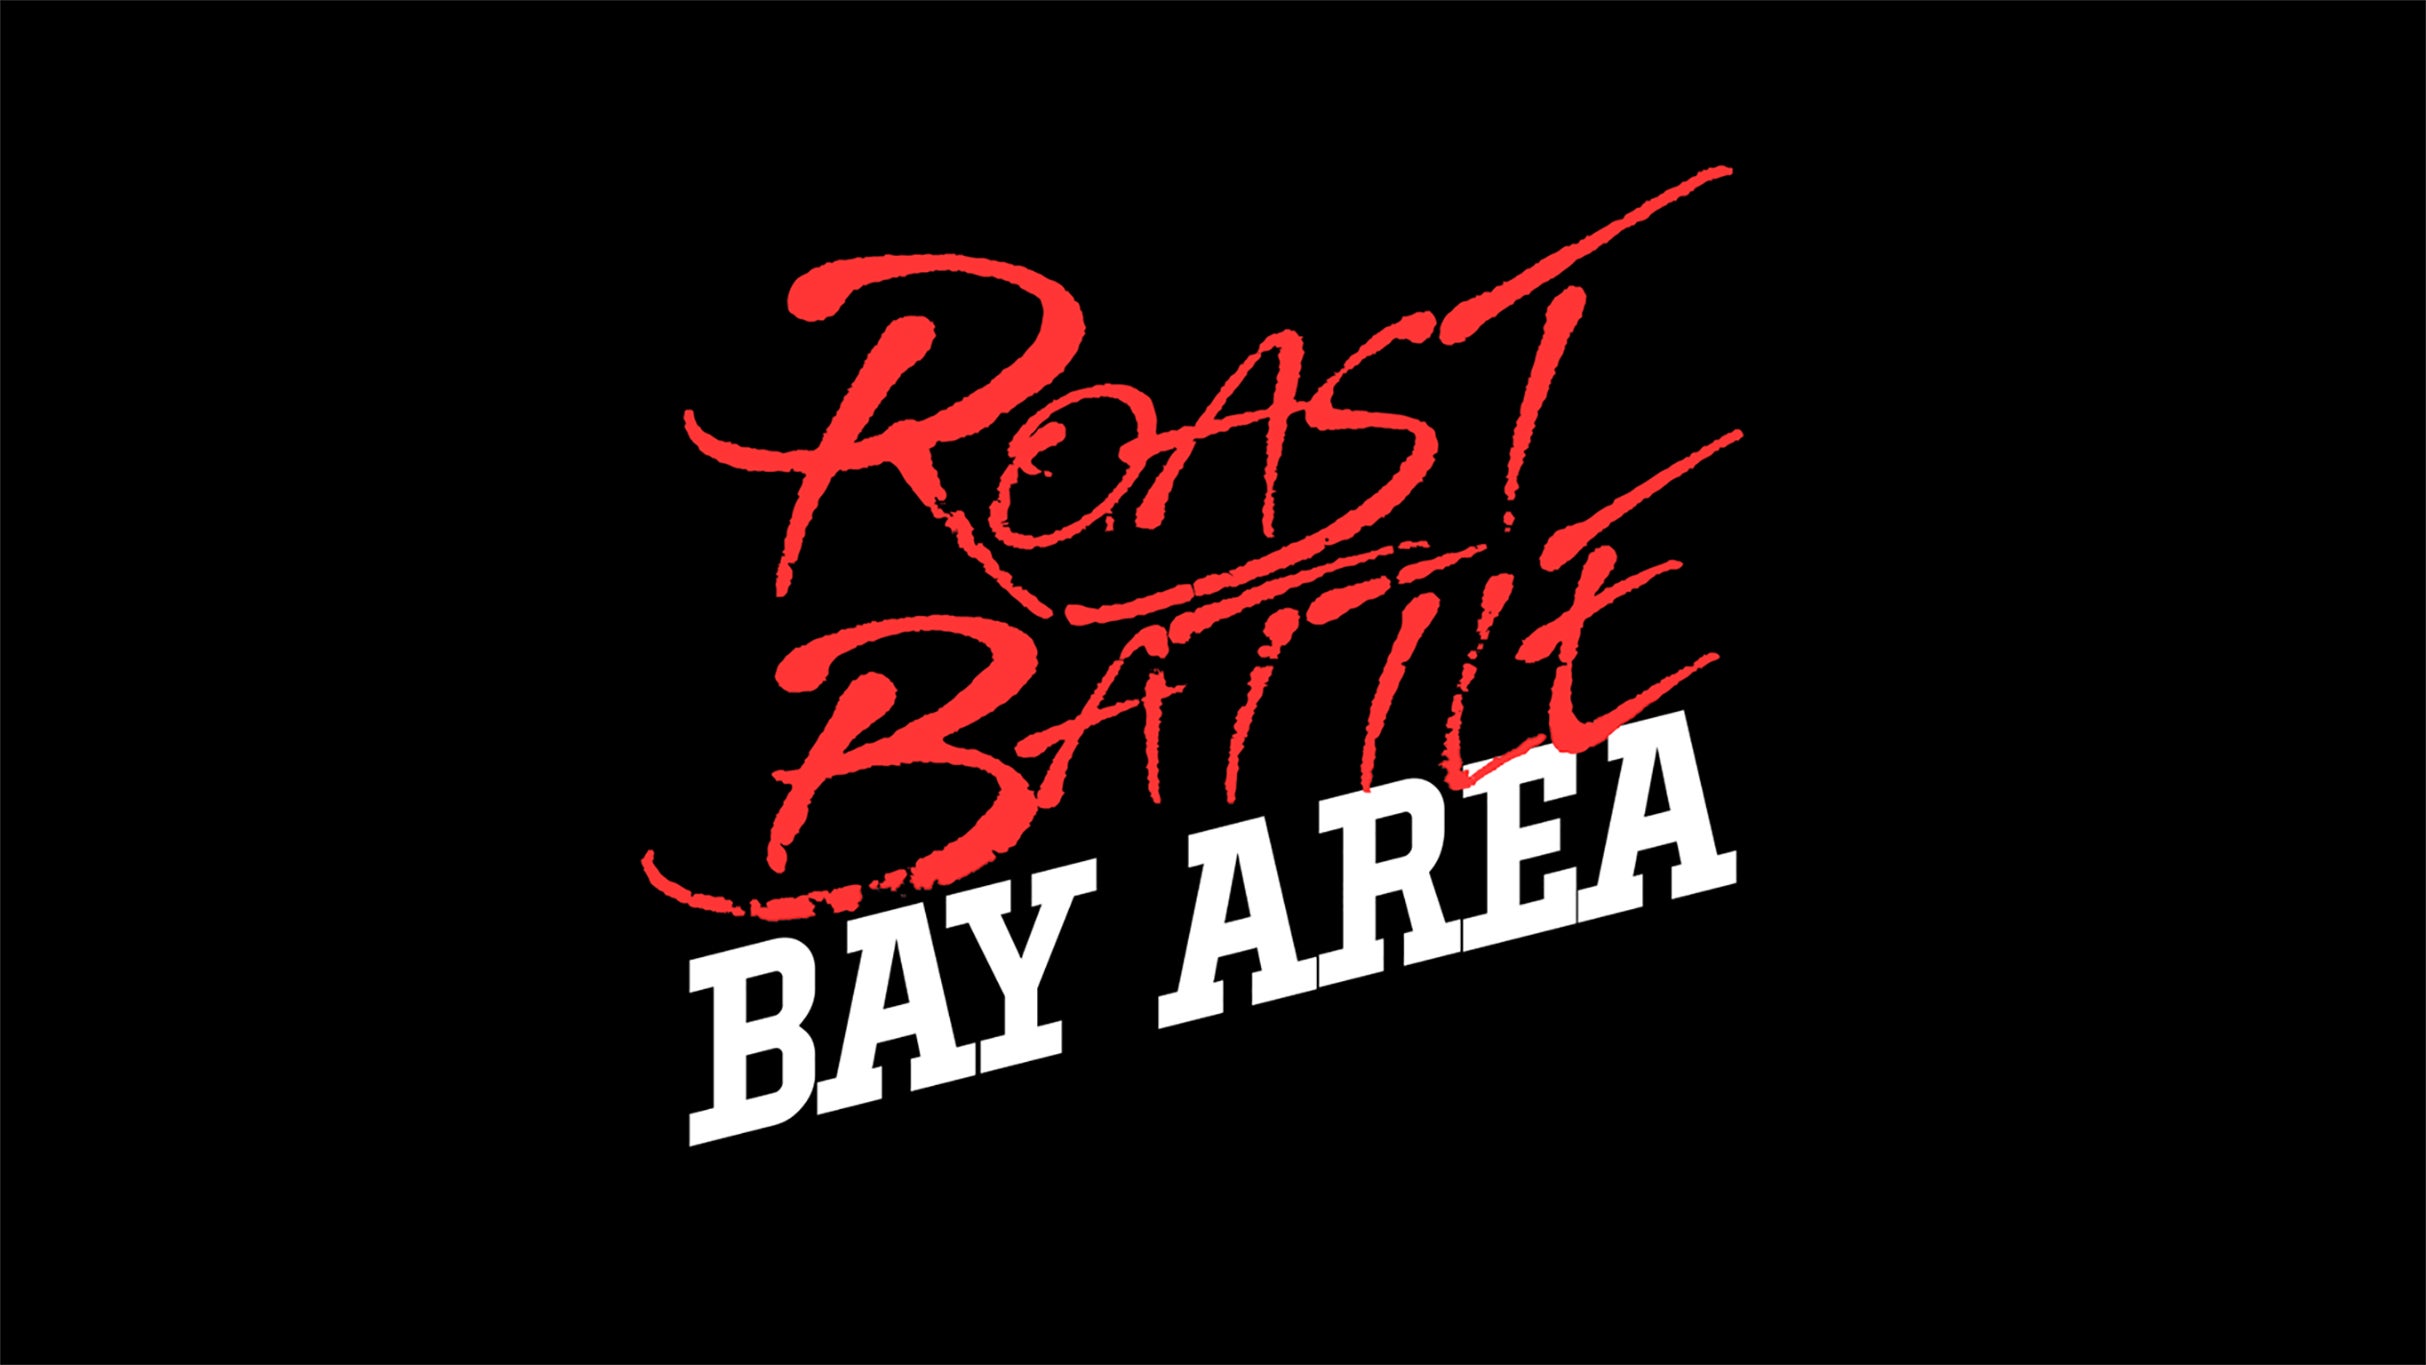 Roast Battle Bay Area at Punch Line Comedy Club - Sacramento